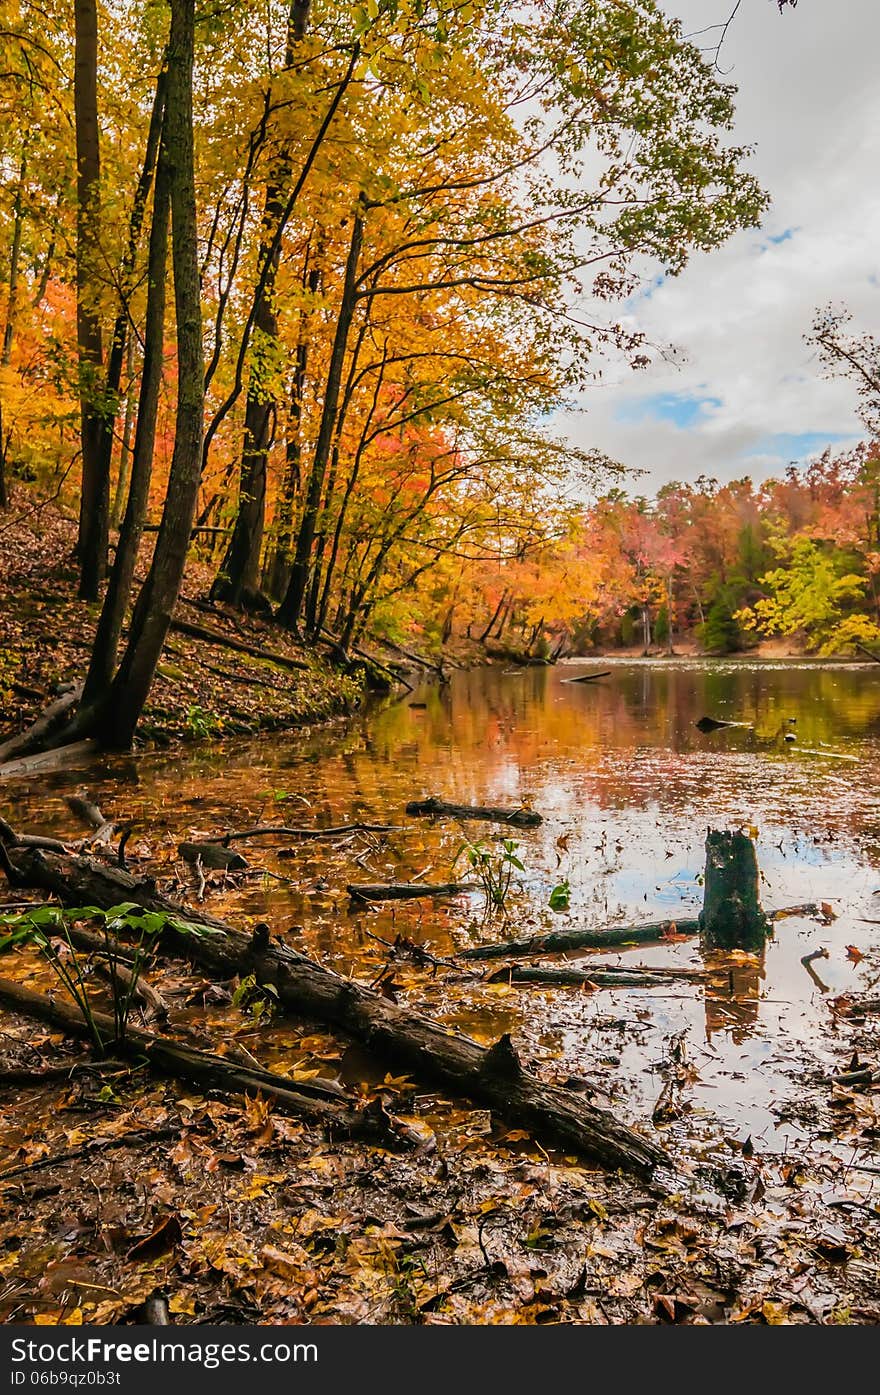 Autumn season at a lake wylie north carolina